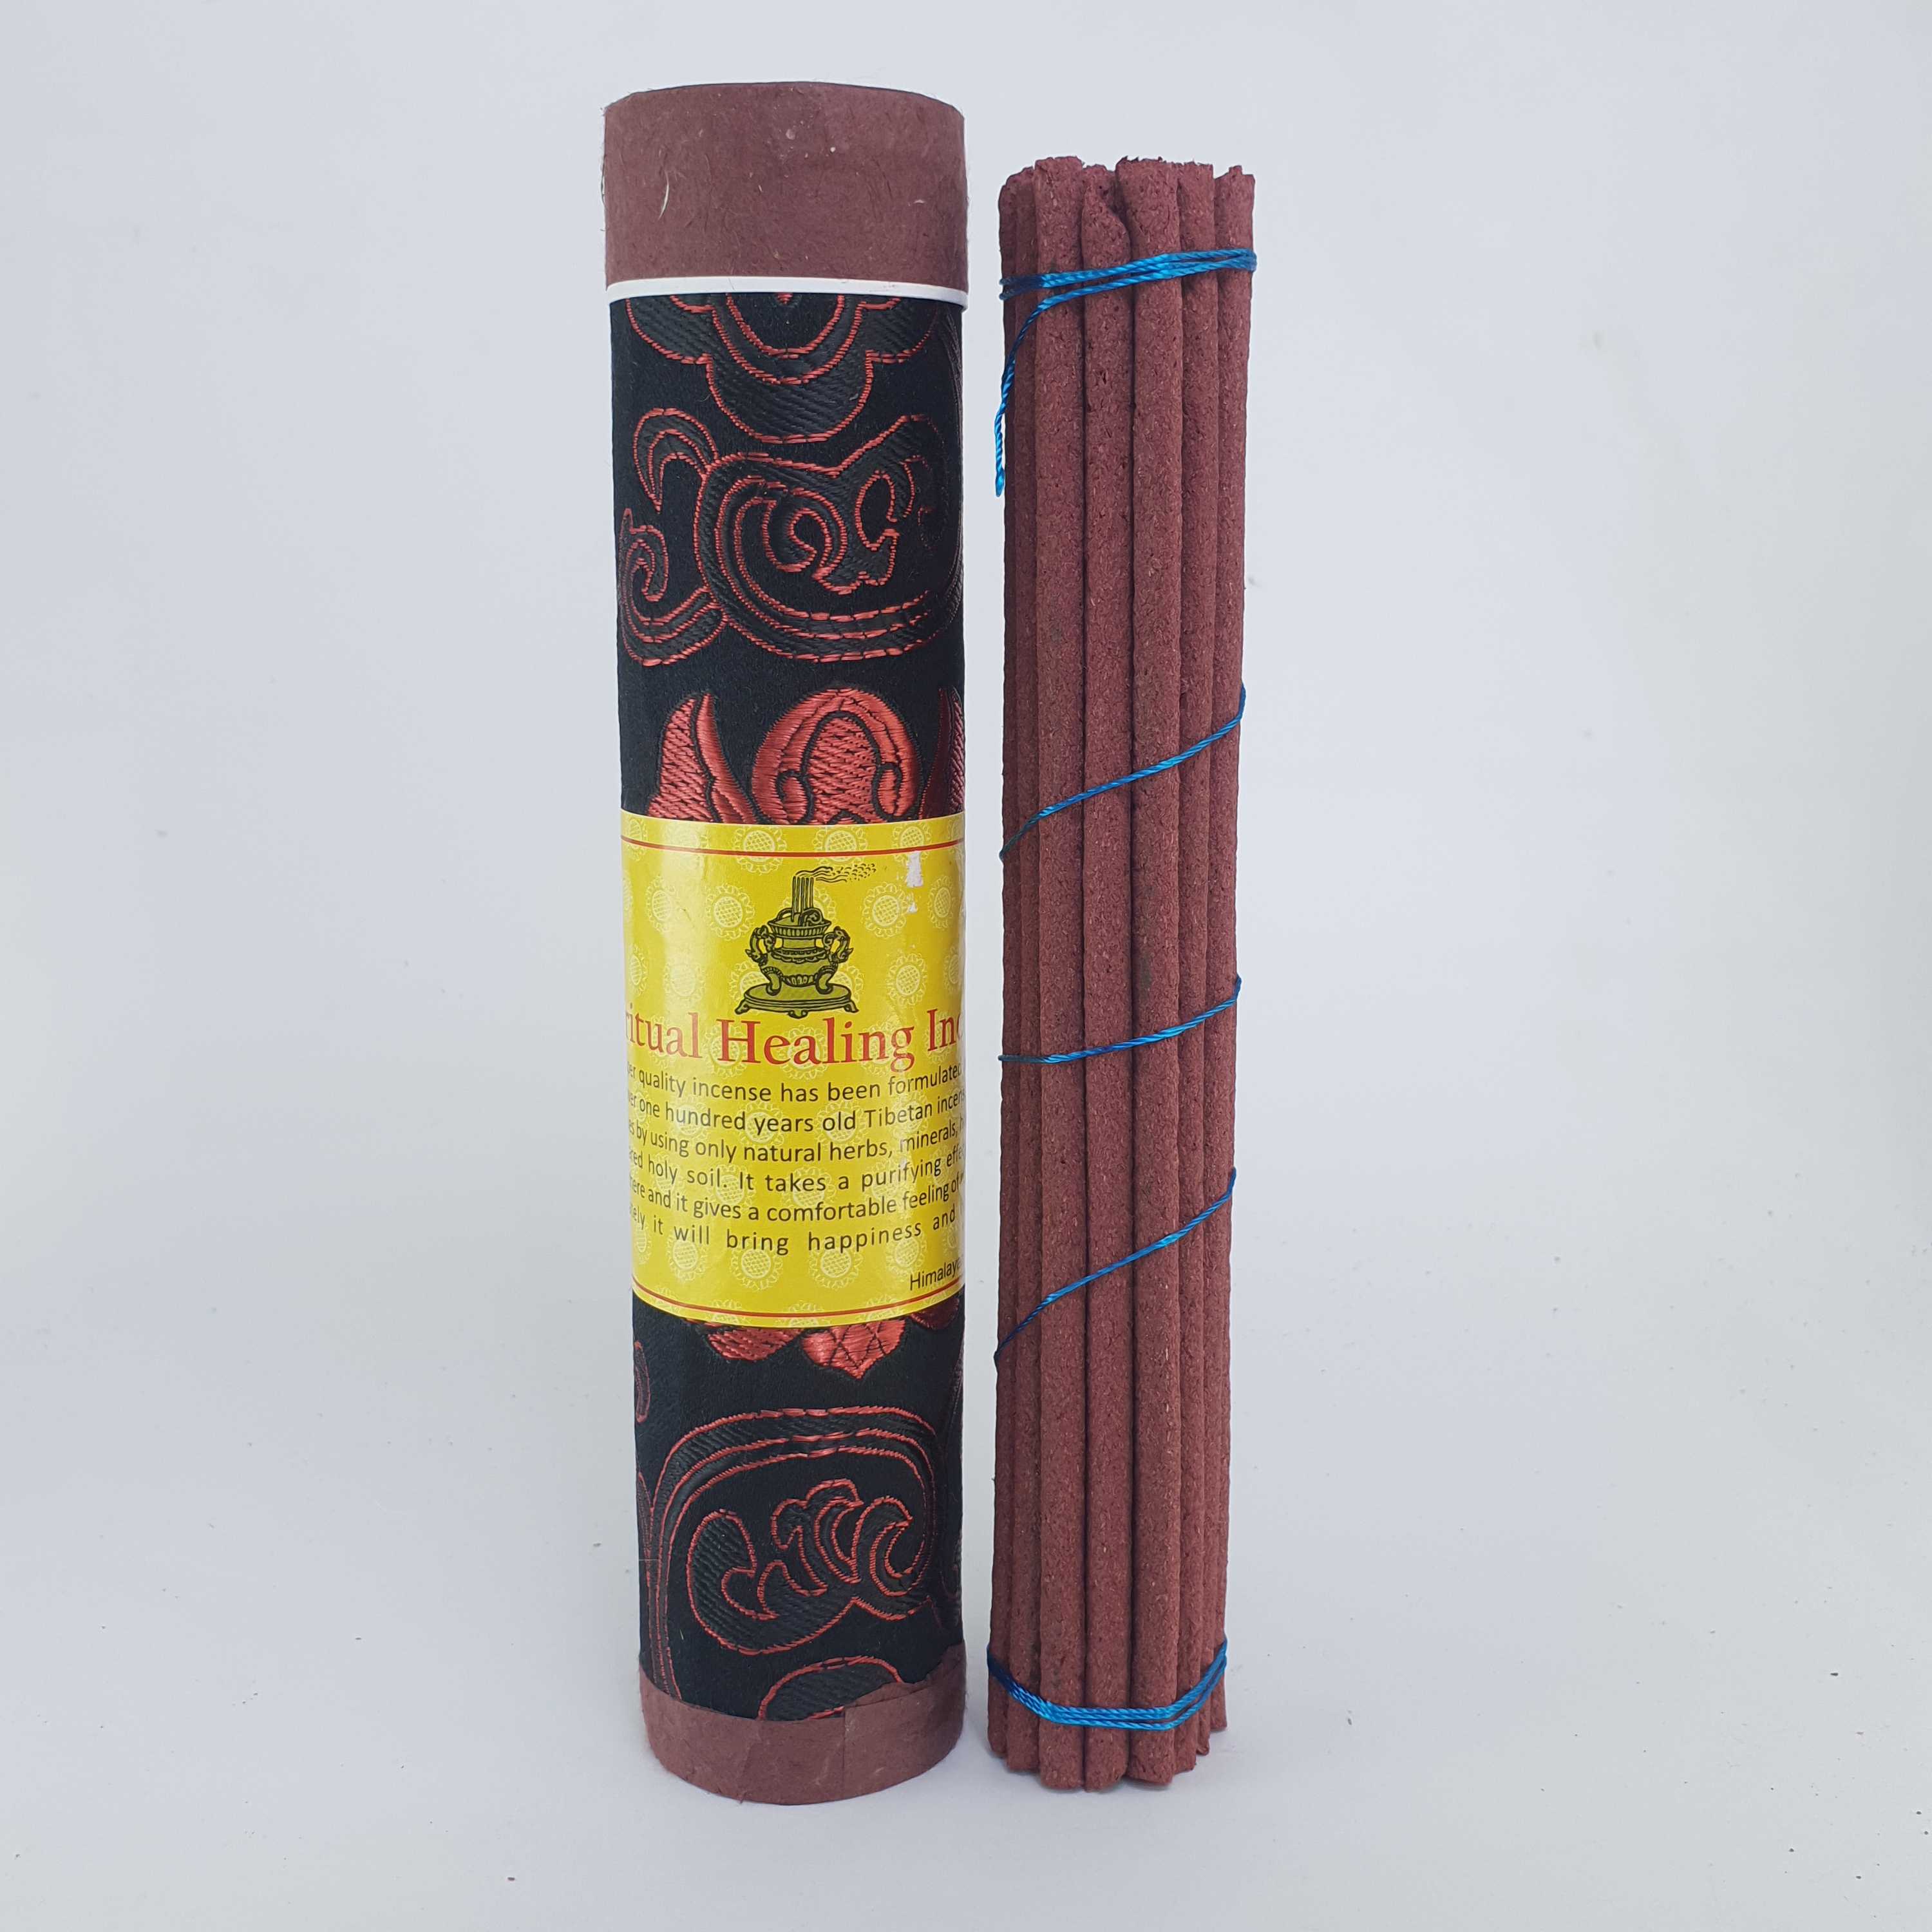 Spiritual Healing Buddhist Herbal Incense tube